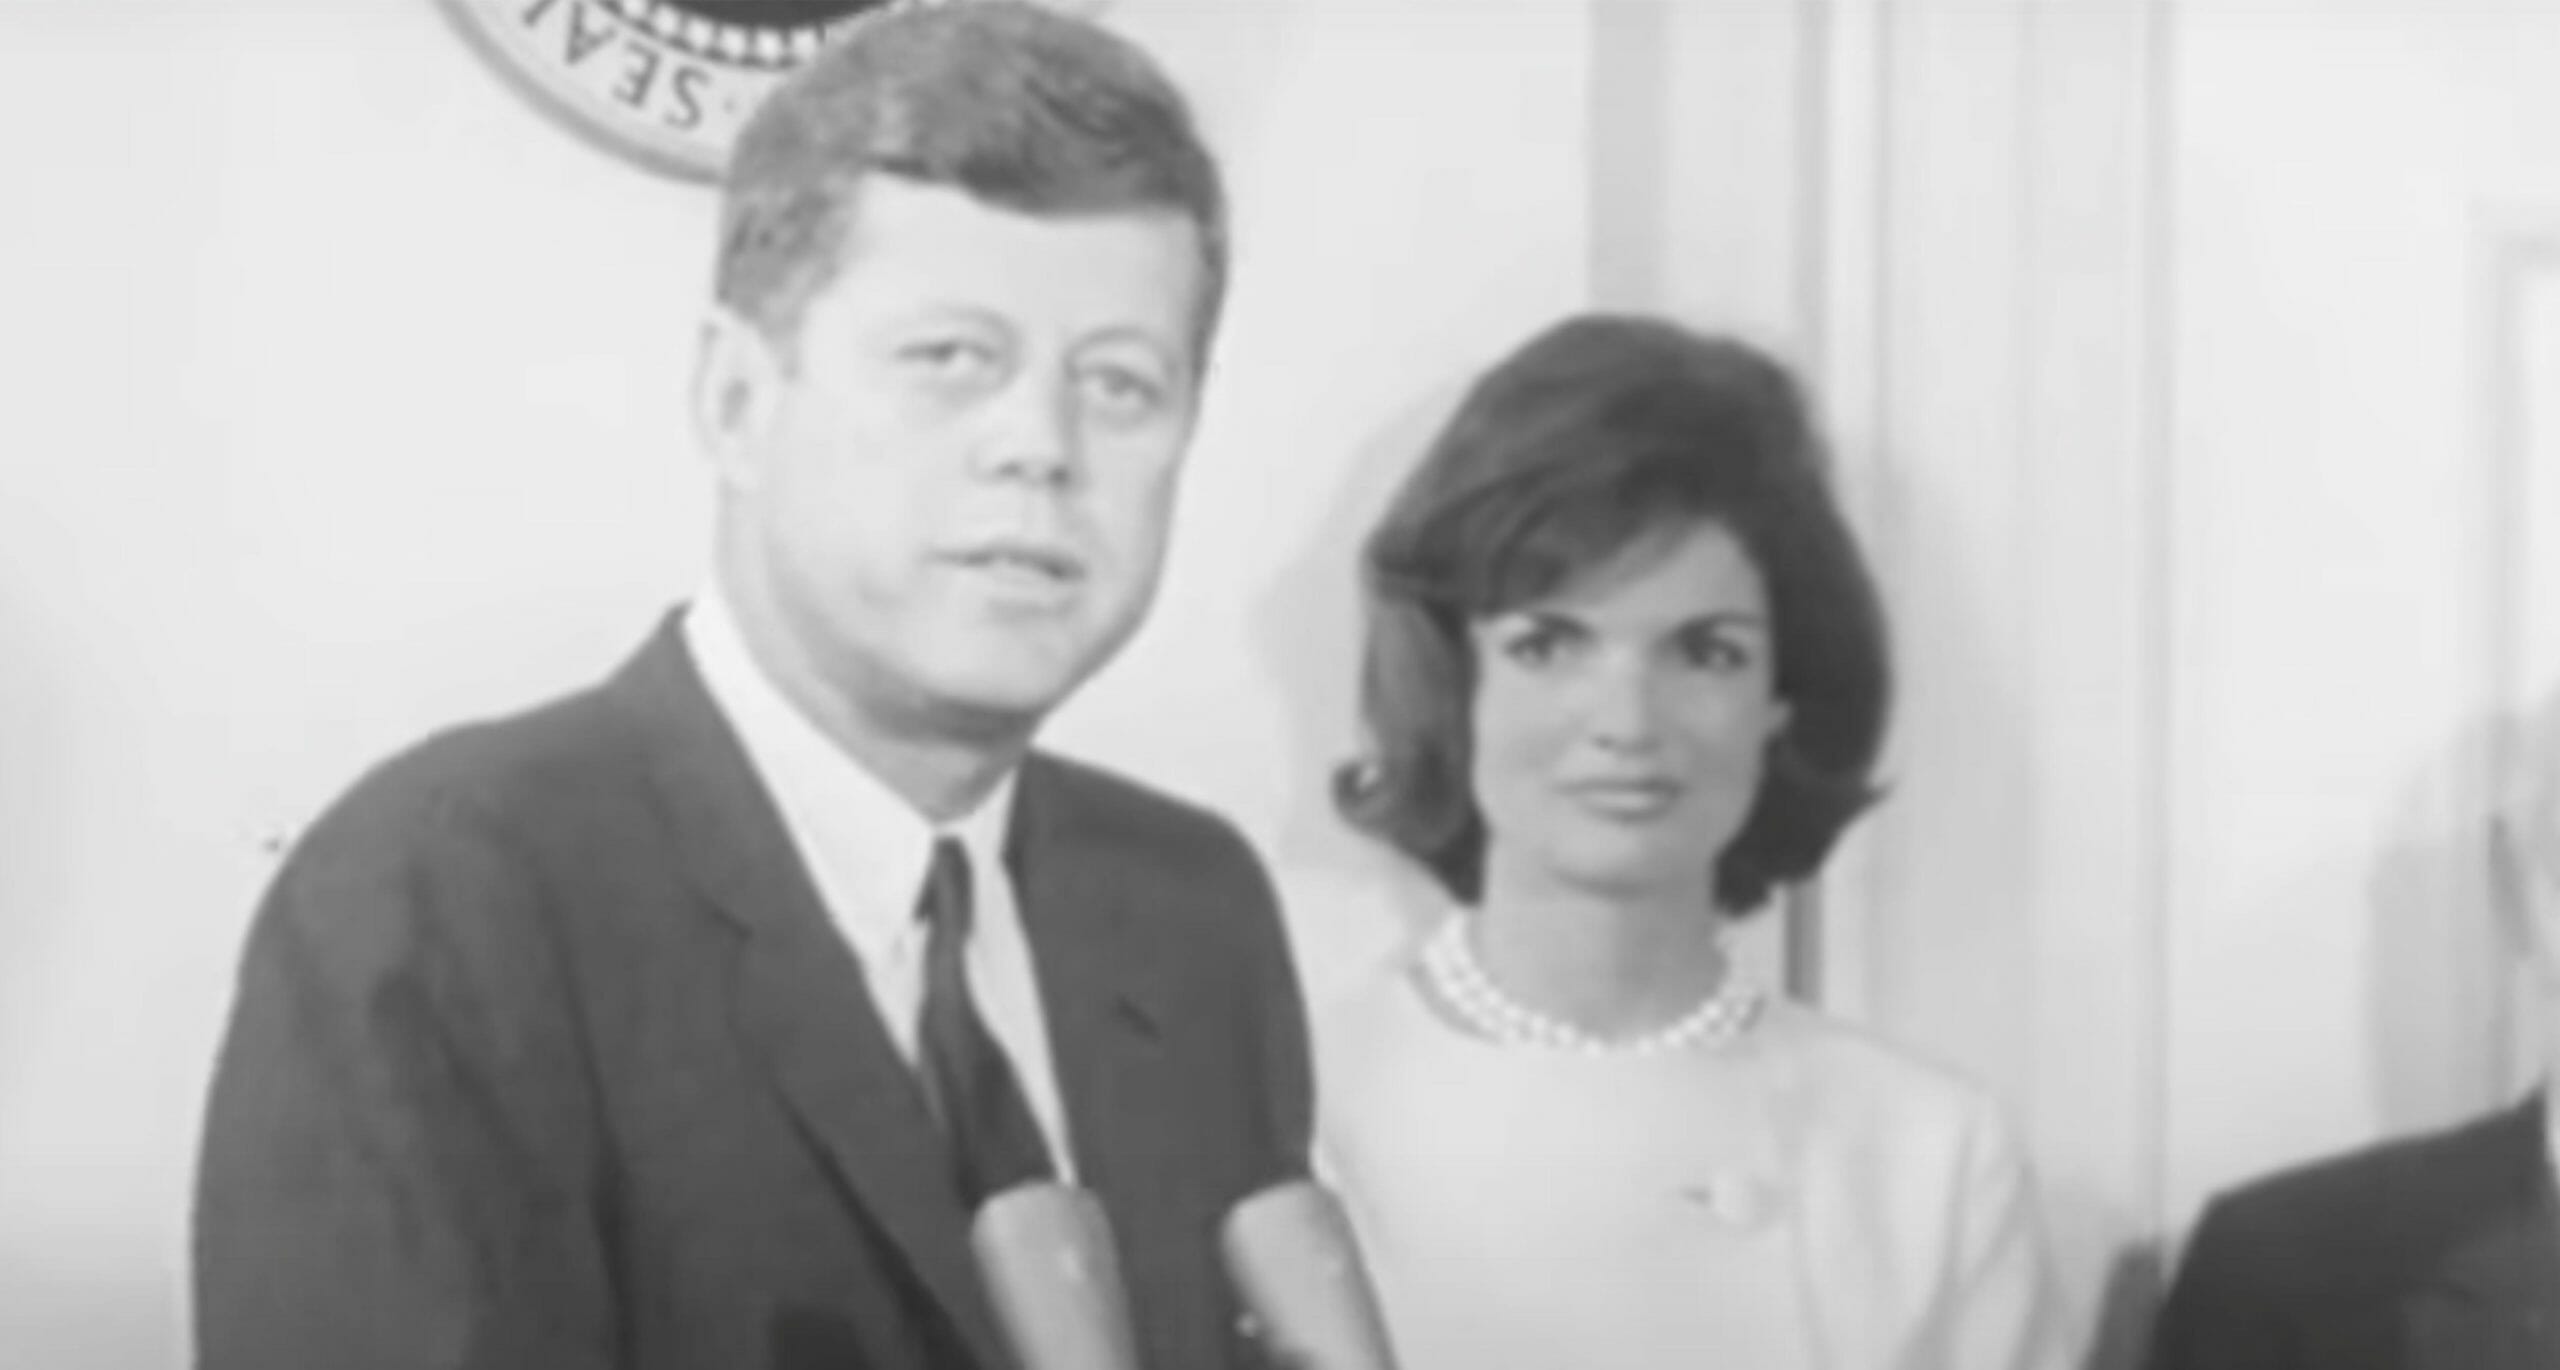 John F. Kennedy, Jackie Kennedy